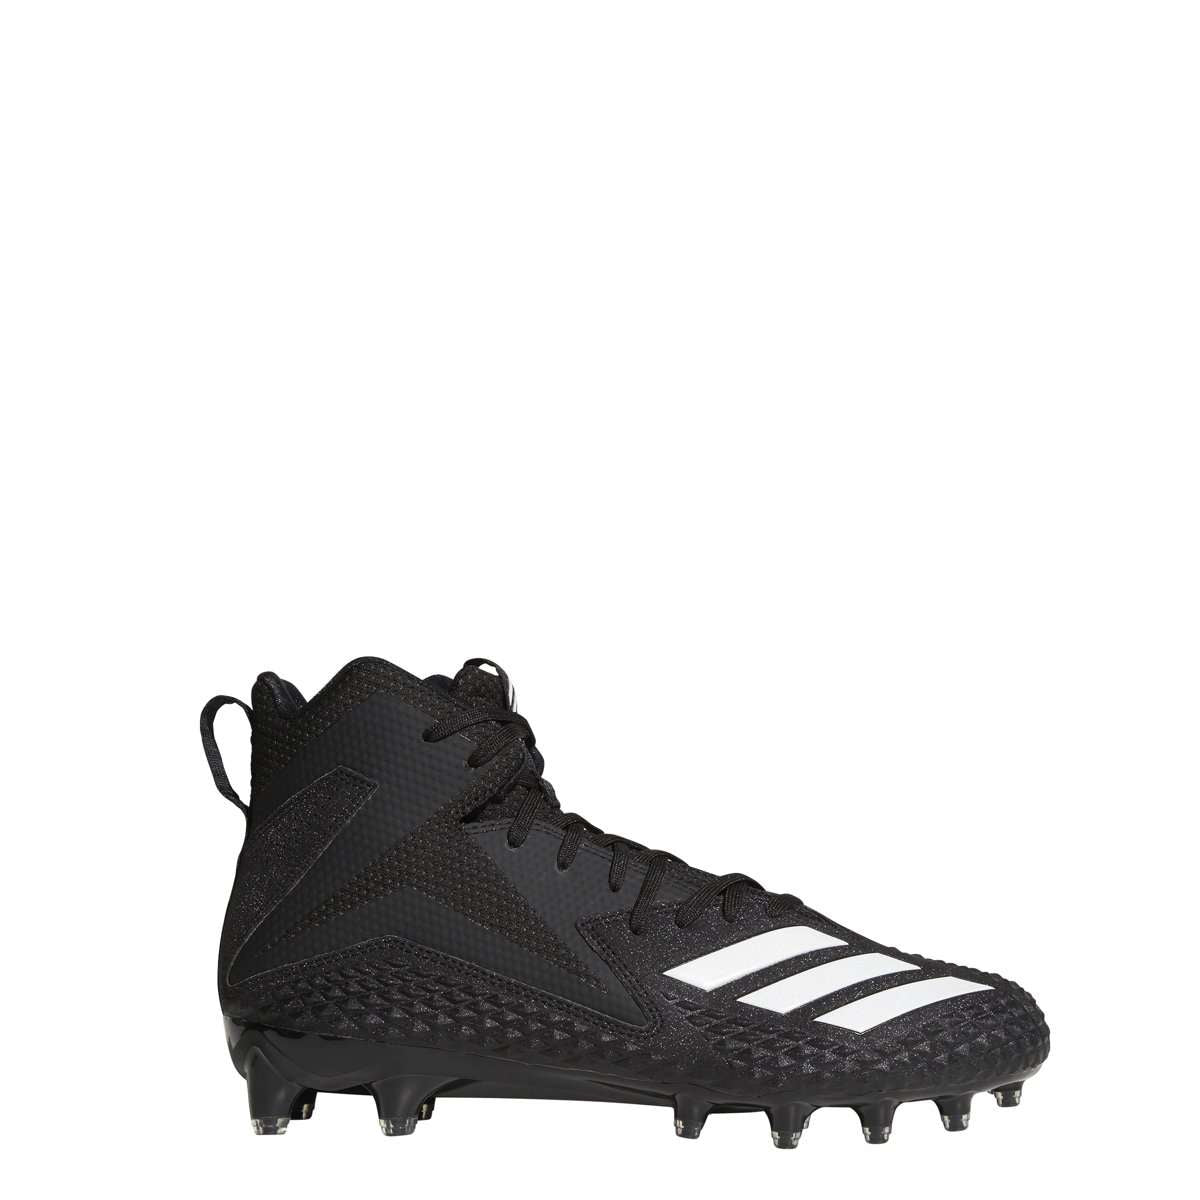 men's freak x carbon mid football shoe